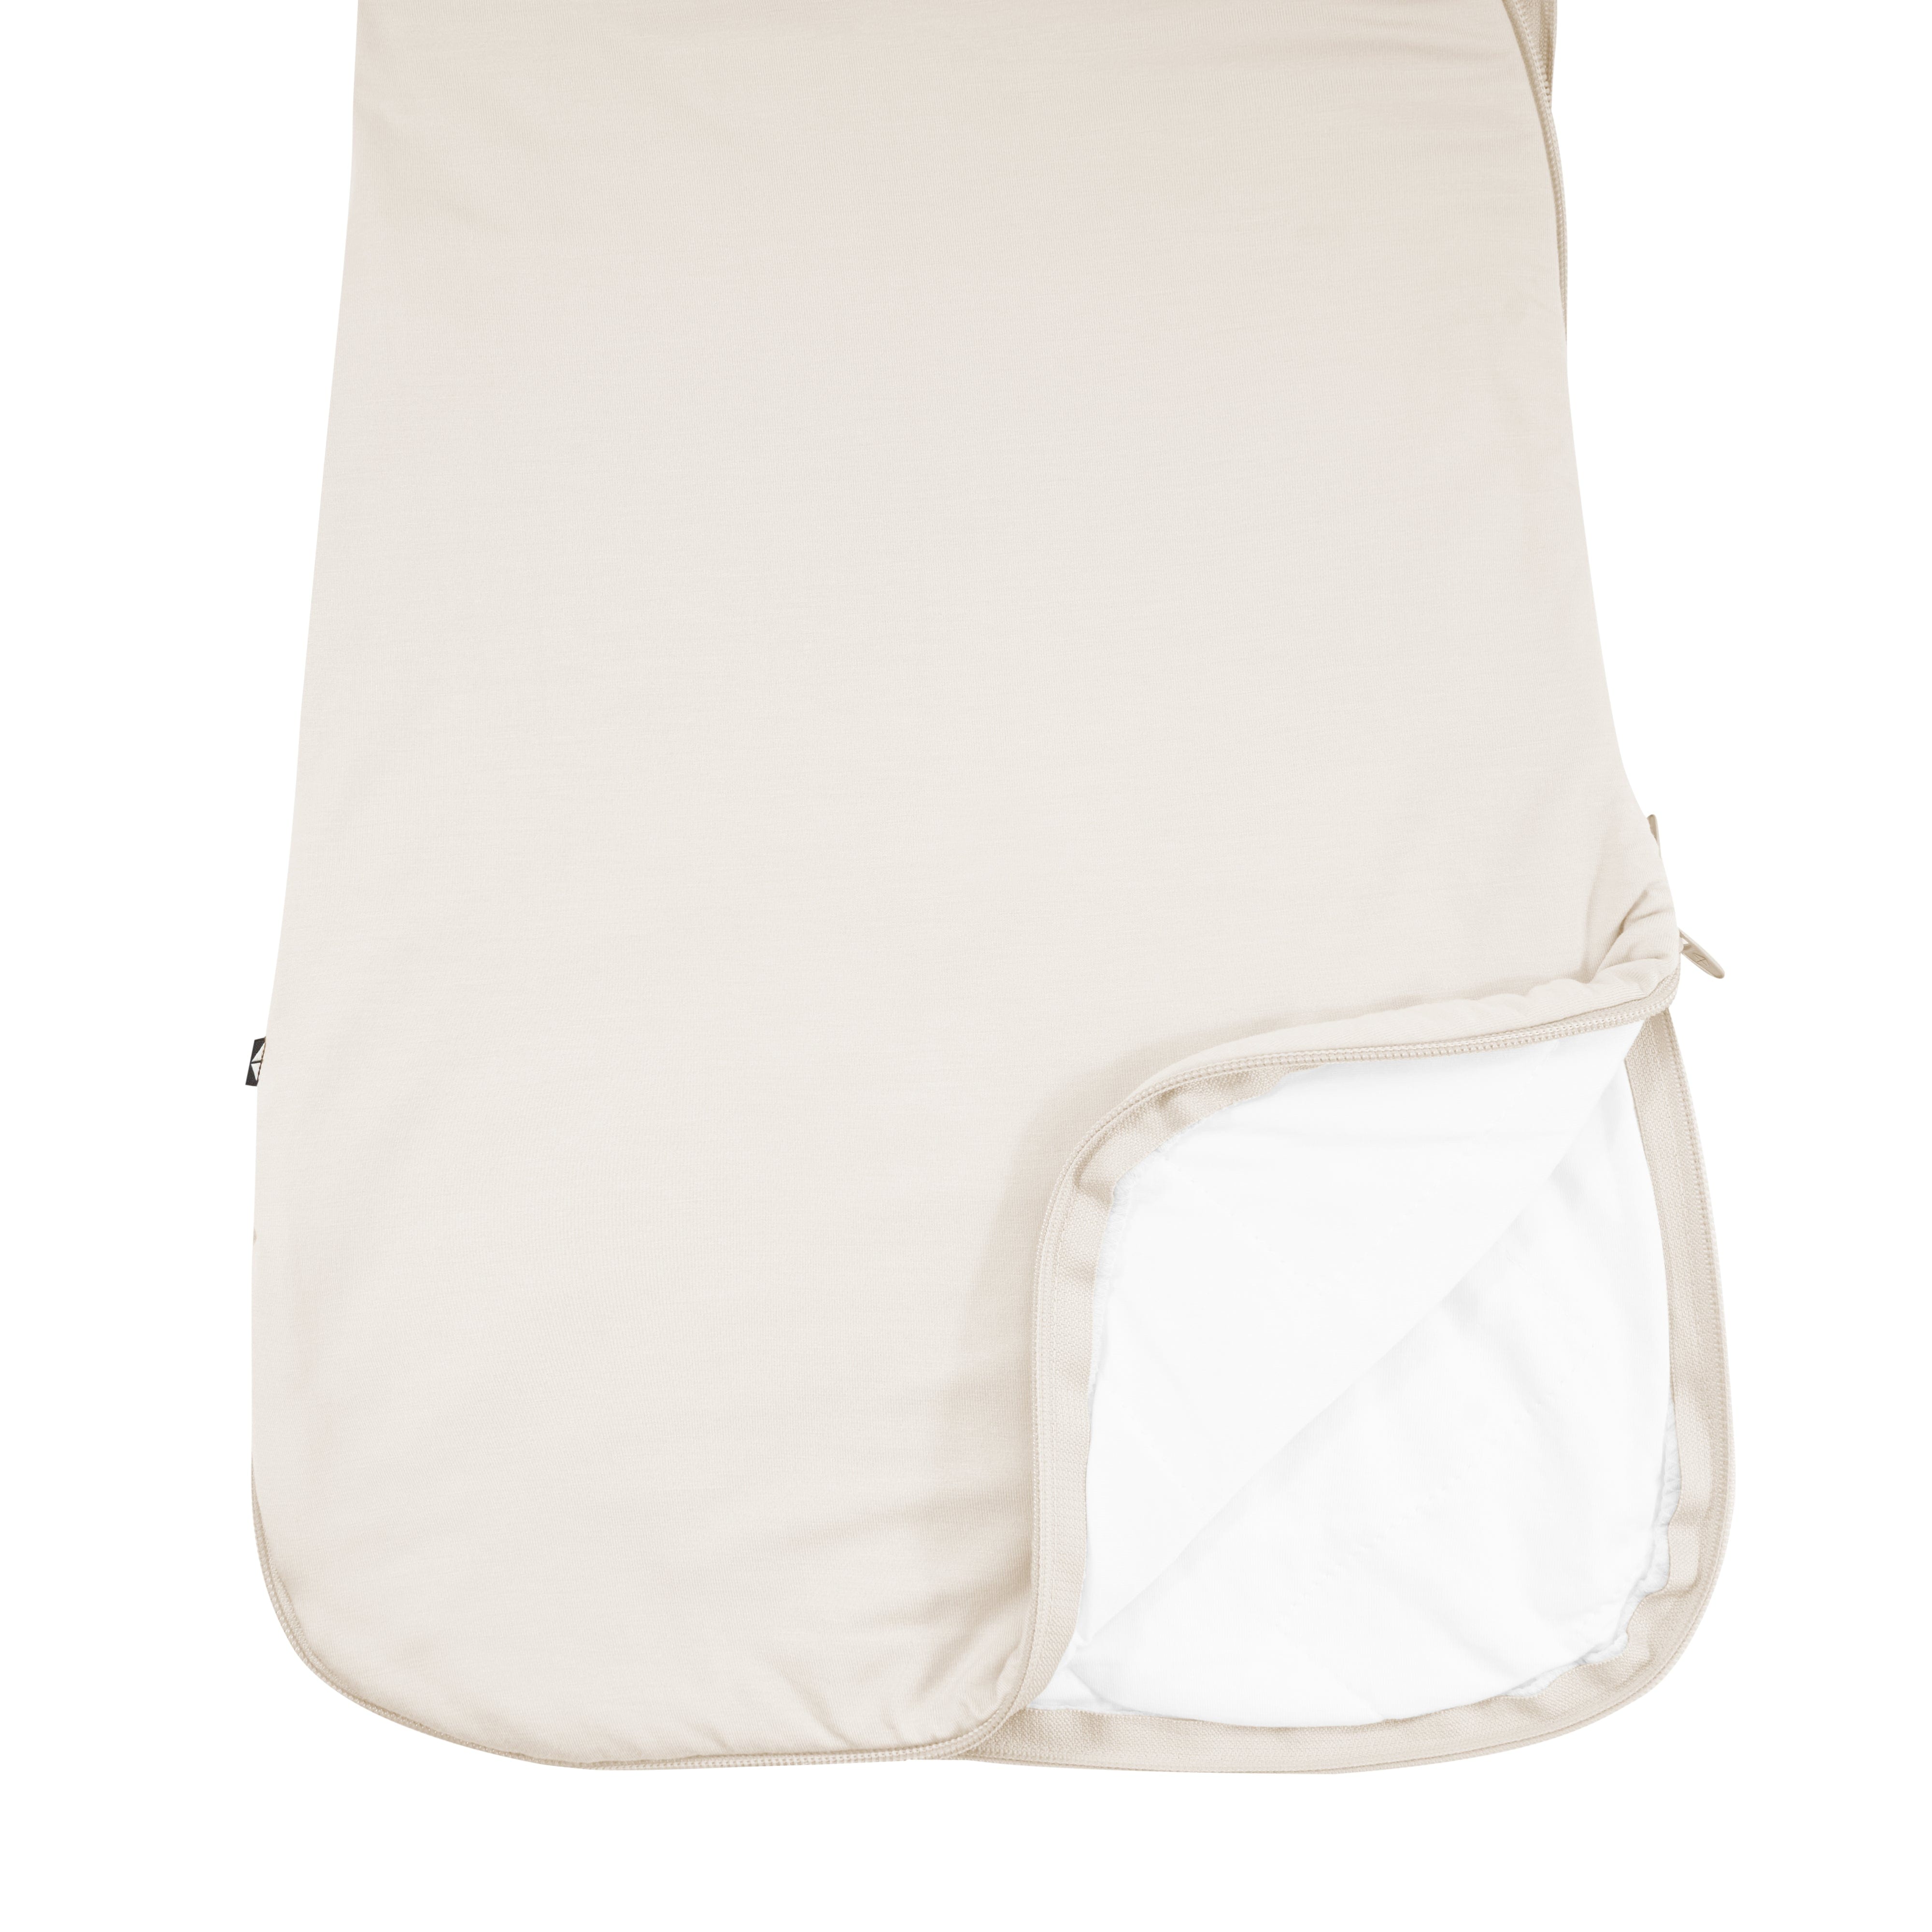 Kyte Baby bamboo Sleep Bag in Oat 1.0 double zipper